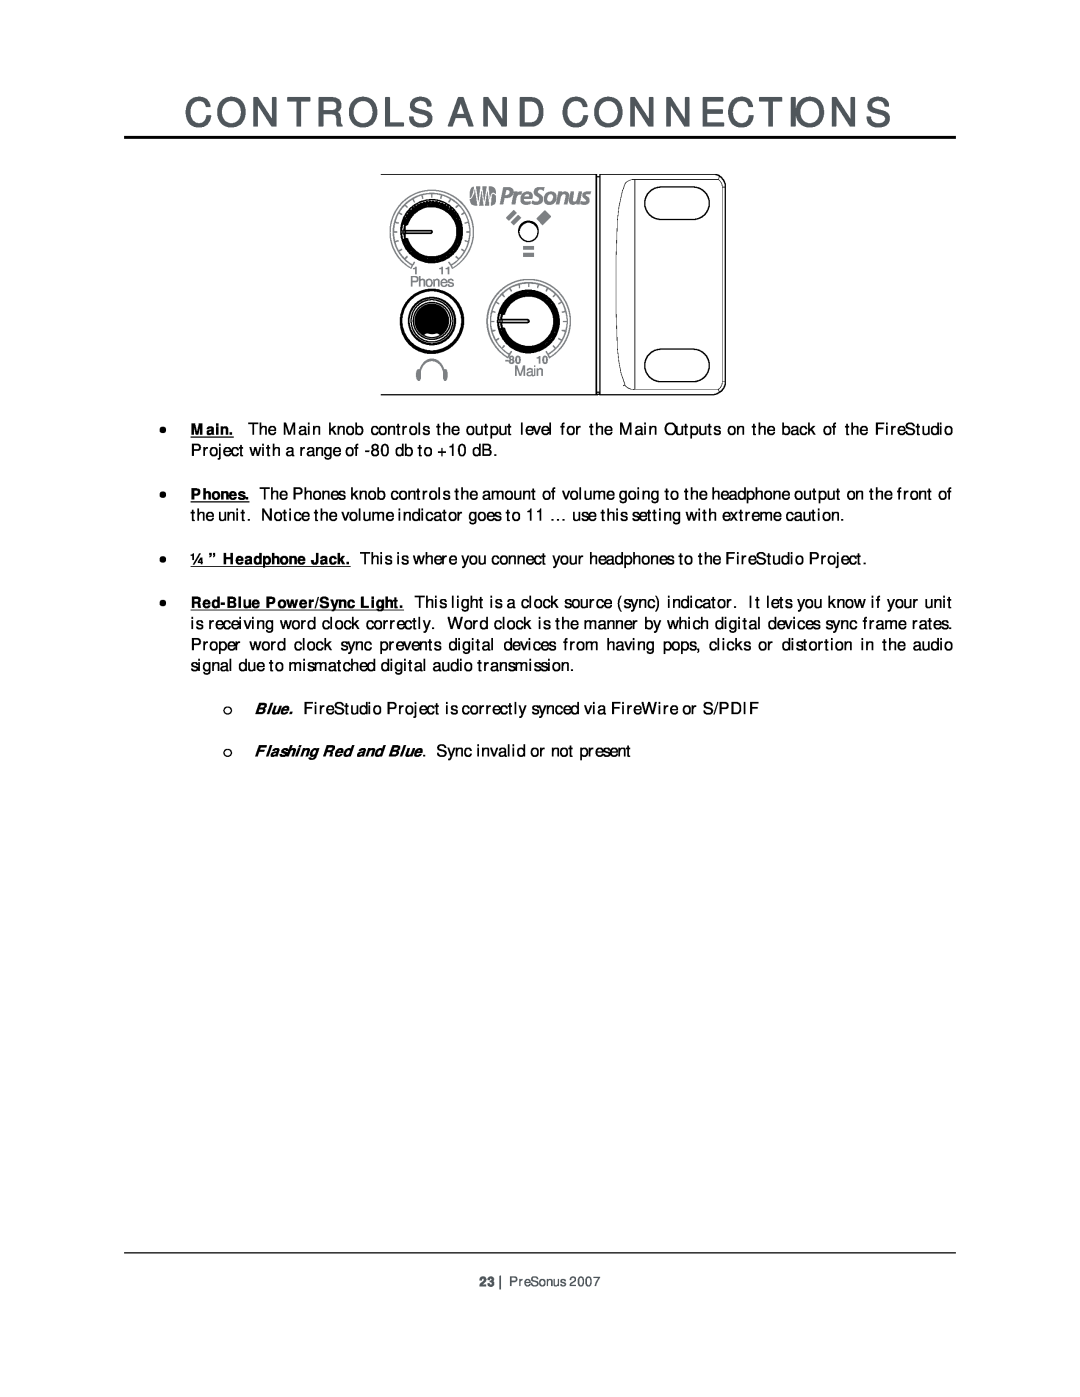 Presonus Audio electronic Microphone Preamplifier user manual Controls And Connections, Phones, Main, PreSonus 